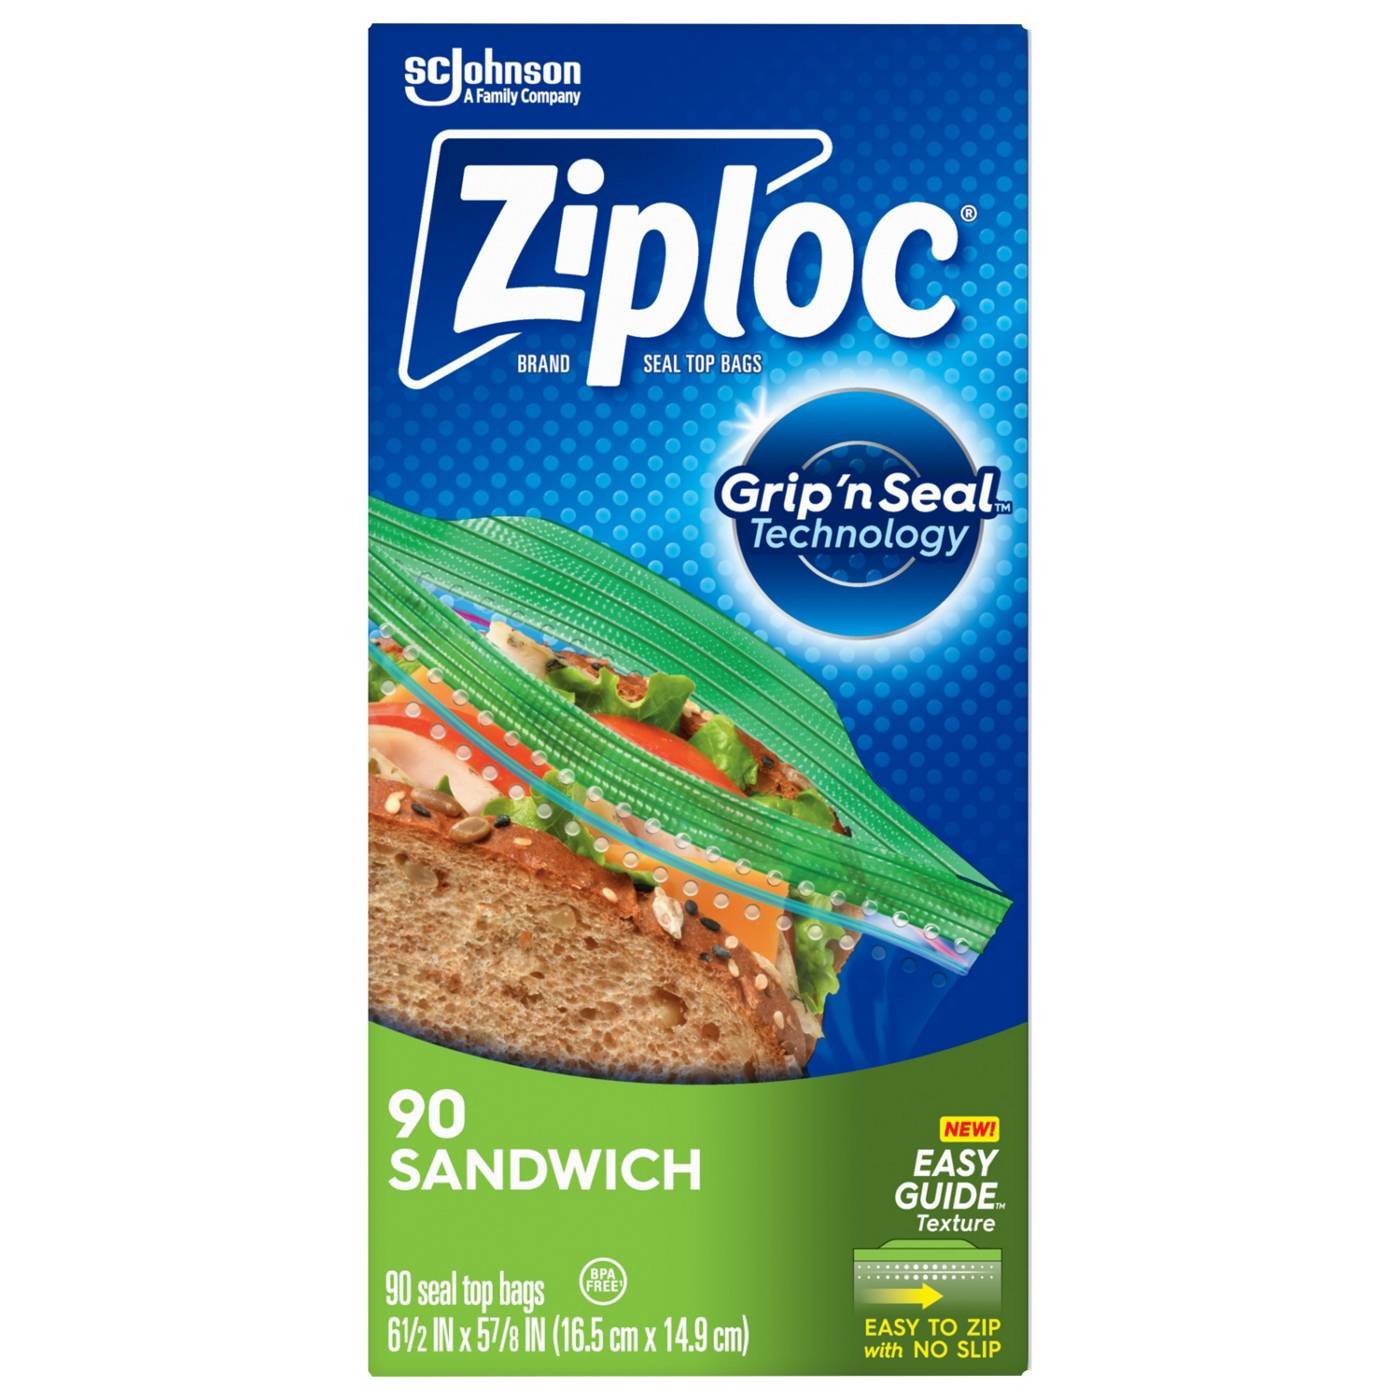 Ziploc Sandwich Bags with EasyGuide; image 6 of 7